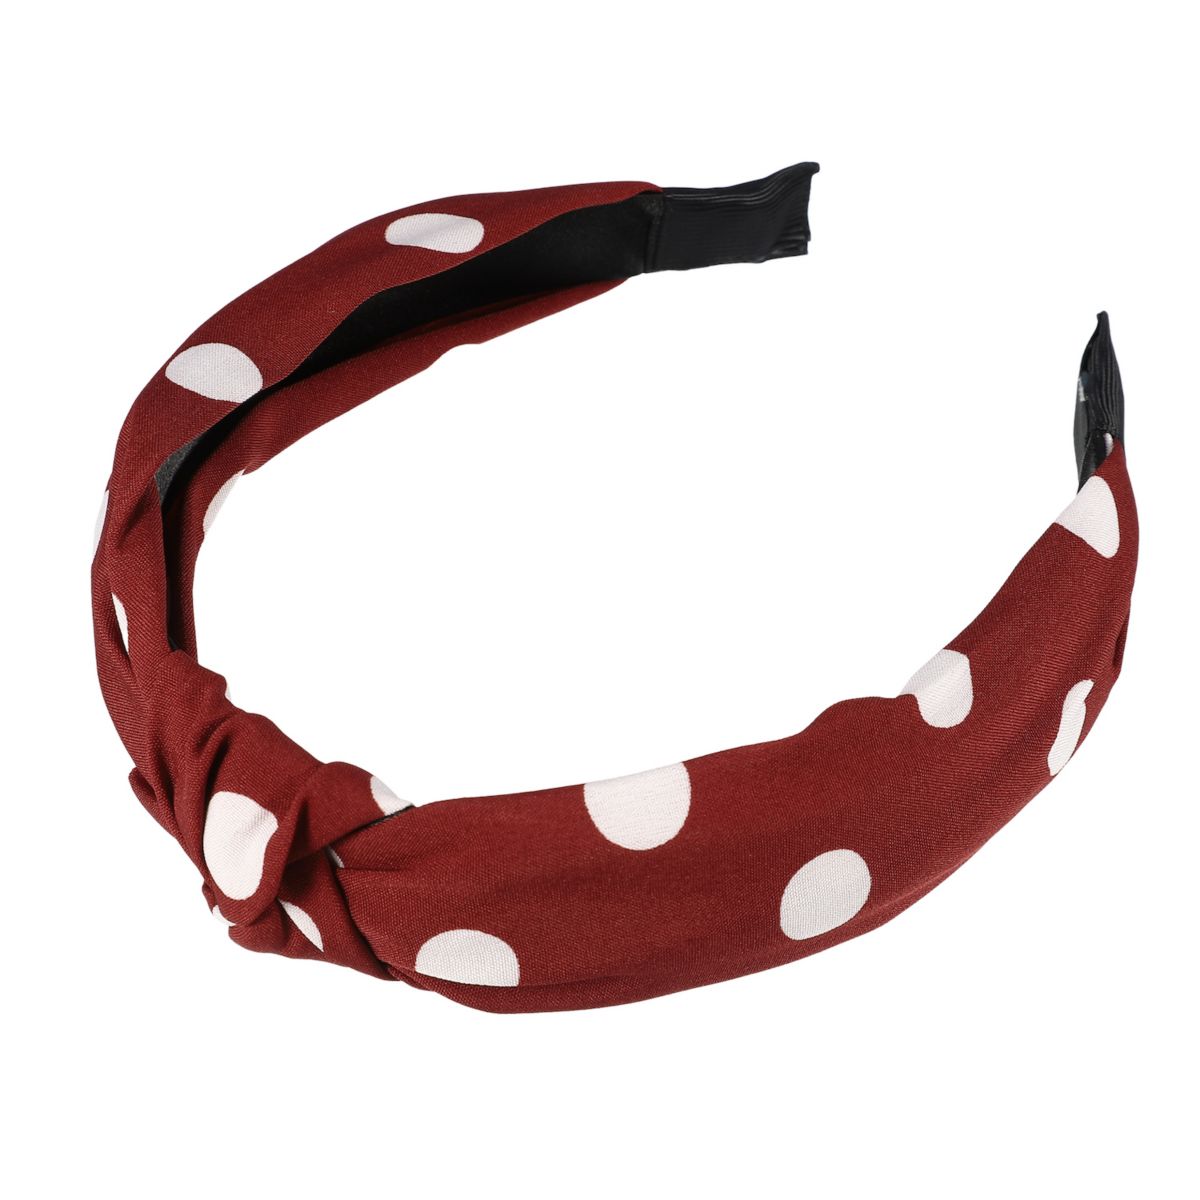 Polka Dot Headband Knotted Headbands For Women Knot Elastic Hair Hoop Unique Bargains